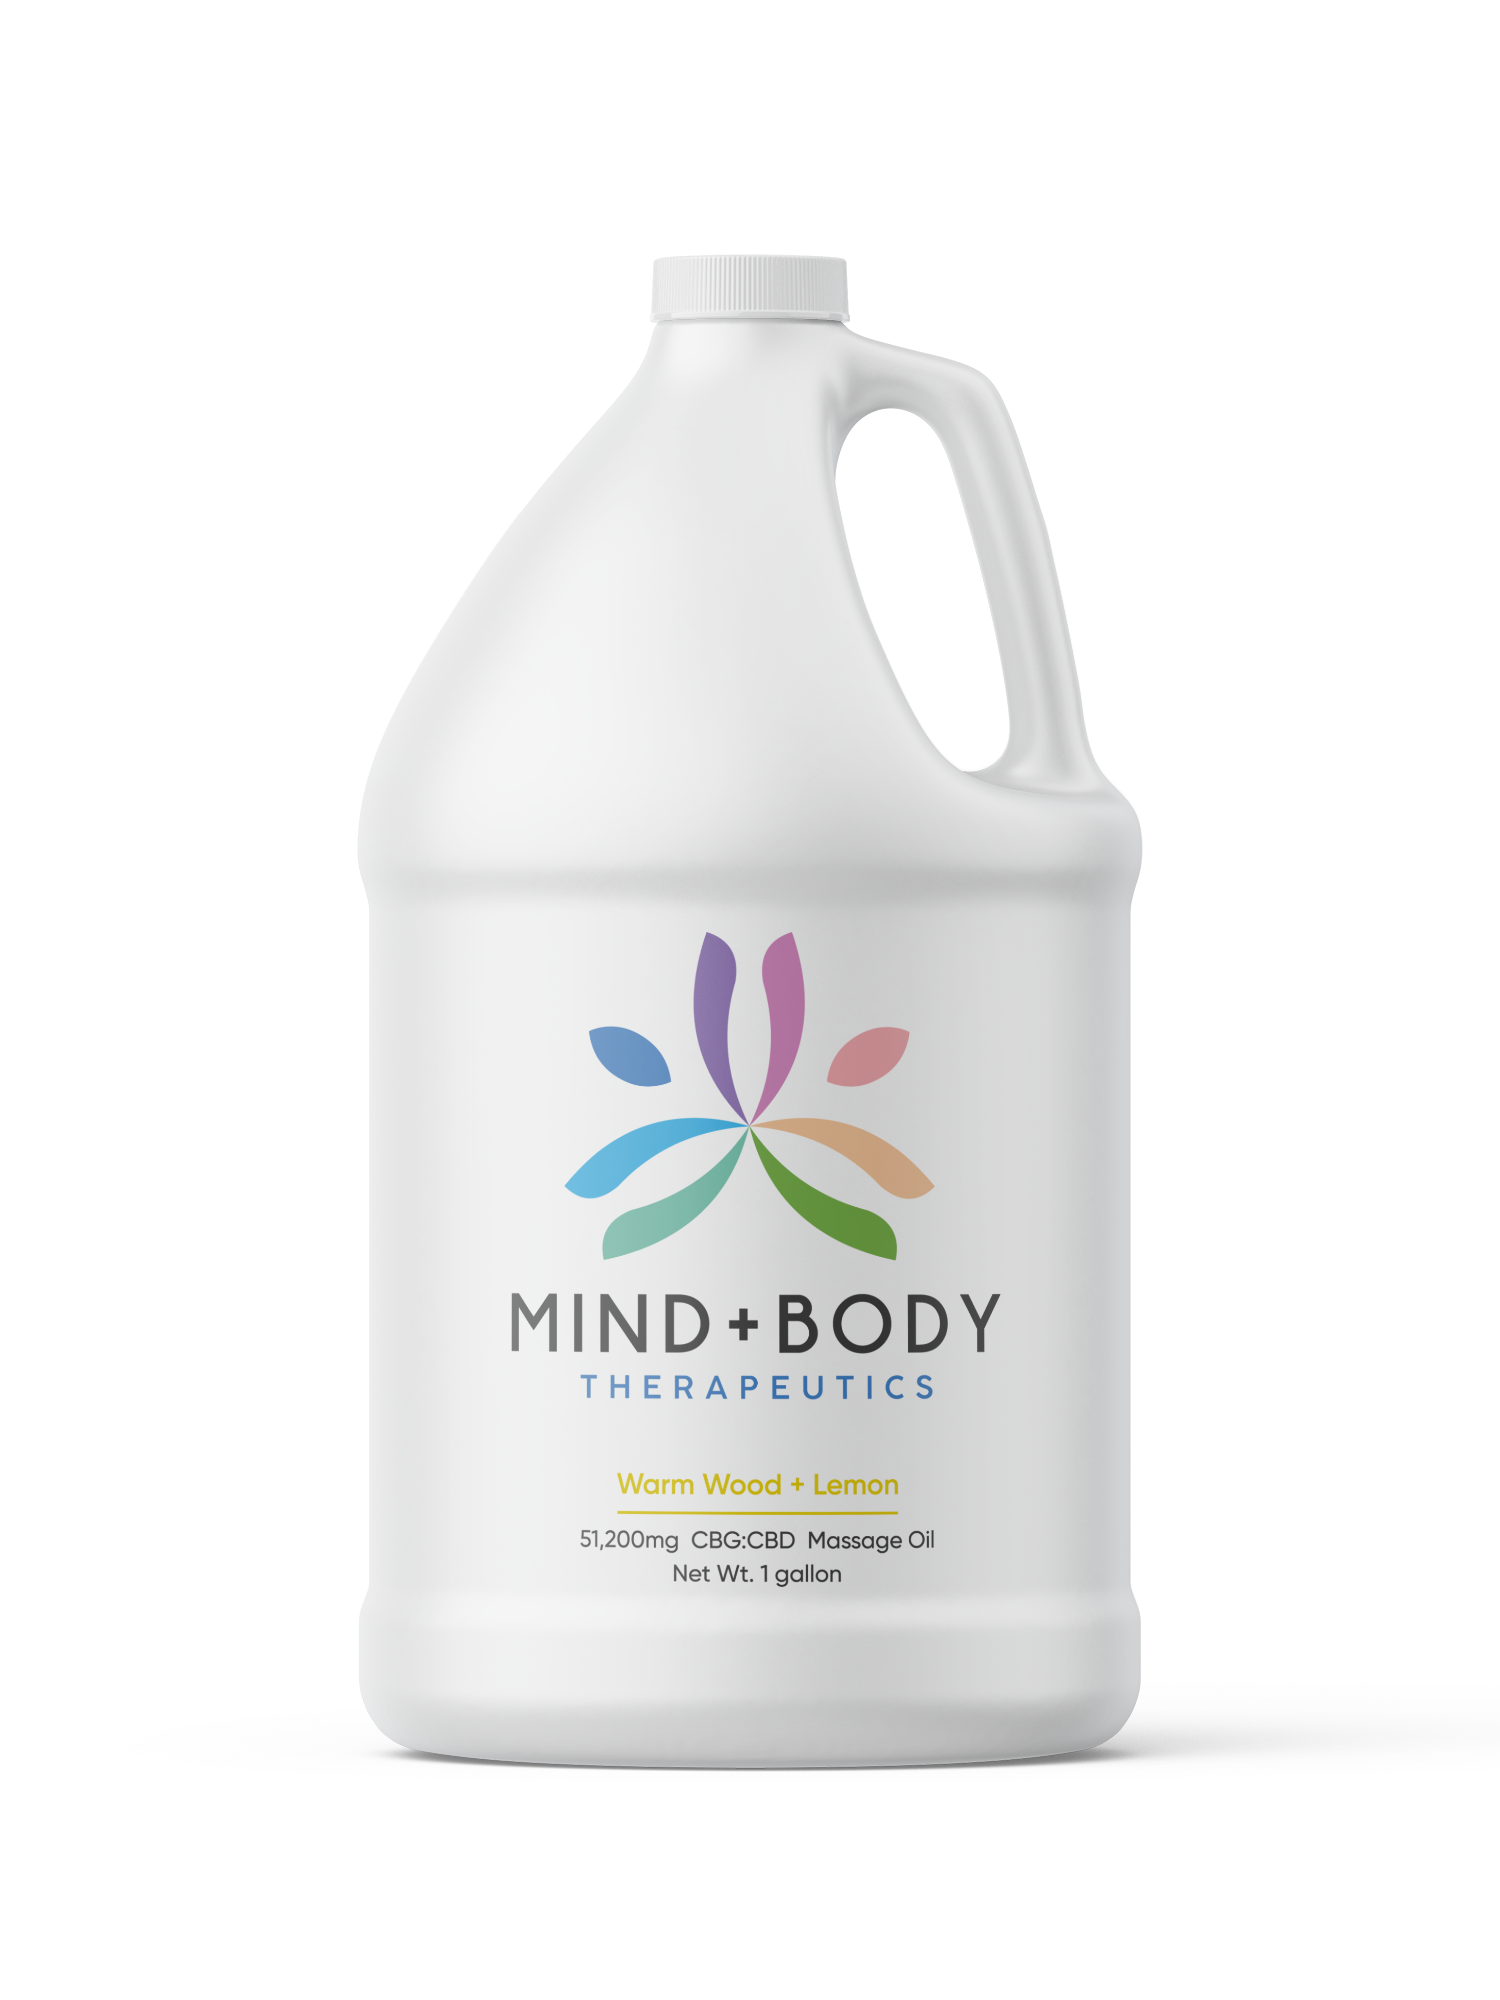 Mind+Body Therapeutics CBG:CBD 51,200mg Massage Oil 1 Gallon - Warm Wood + Lemon - hhemp.co Wholesale 